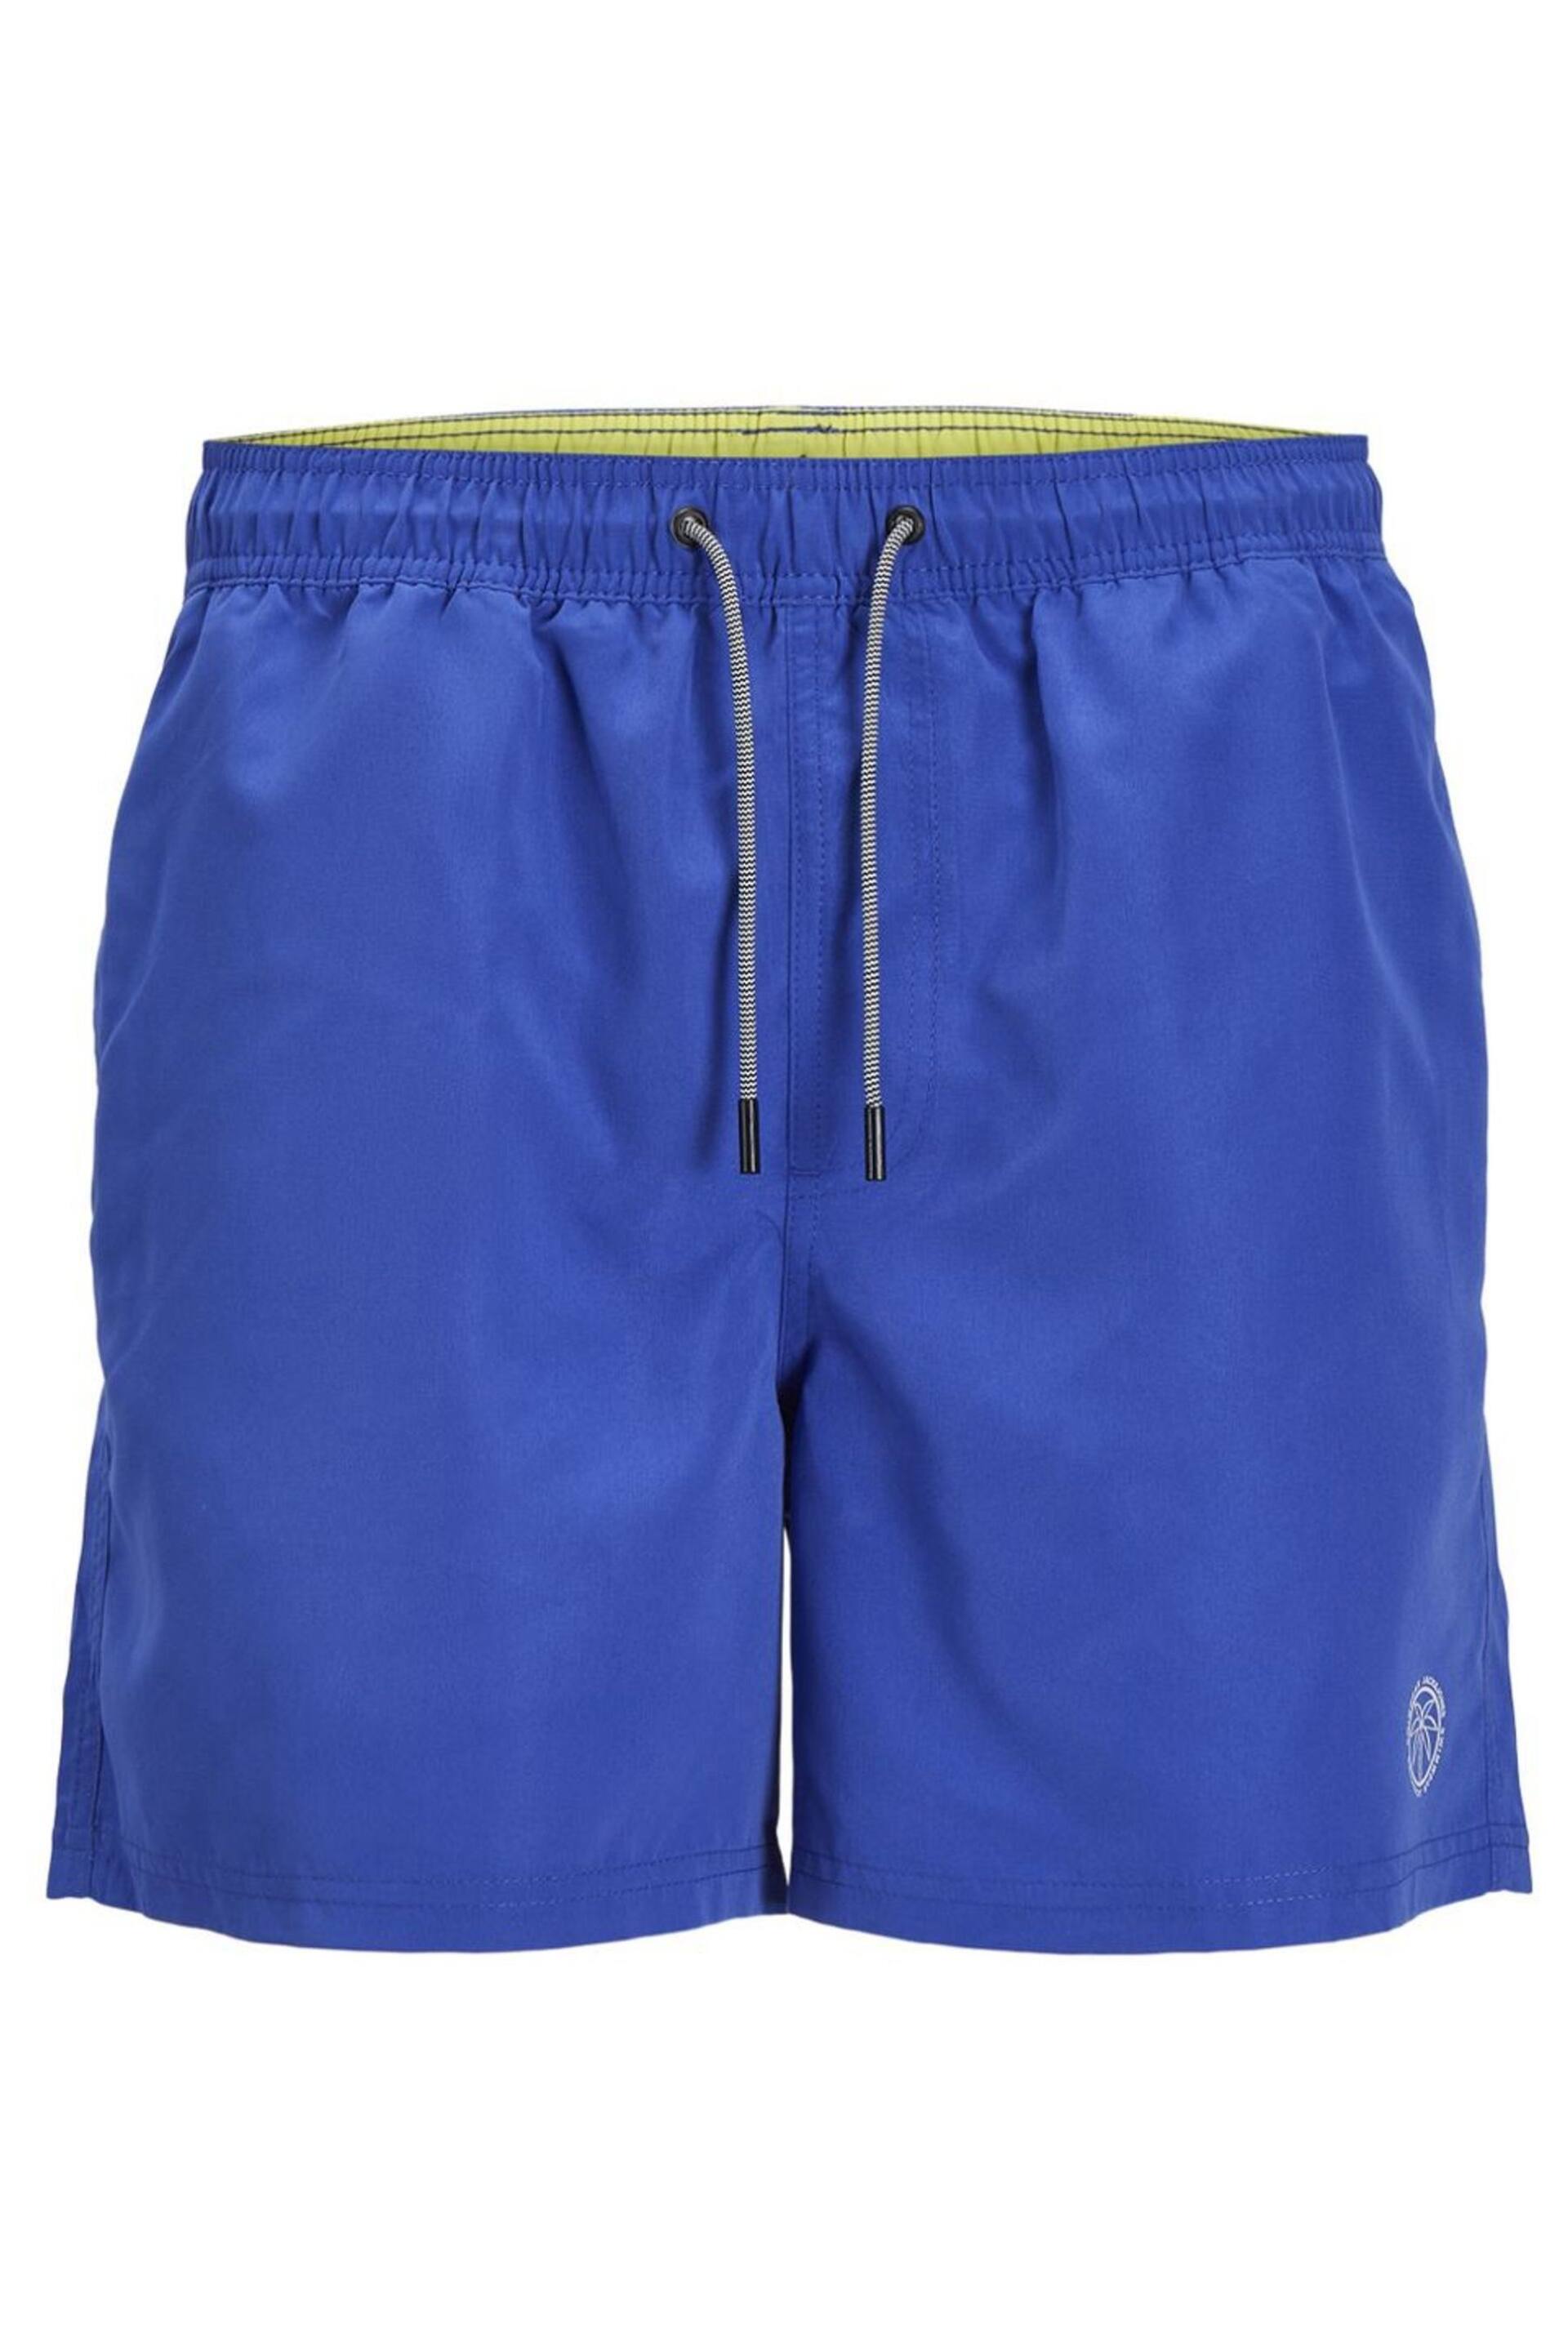 JACK & JONES Blue Swim Shorts With Contrast Lining - Image 1 of 2